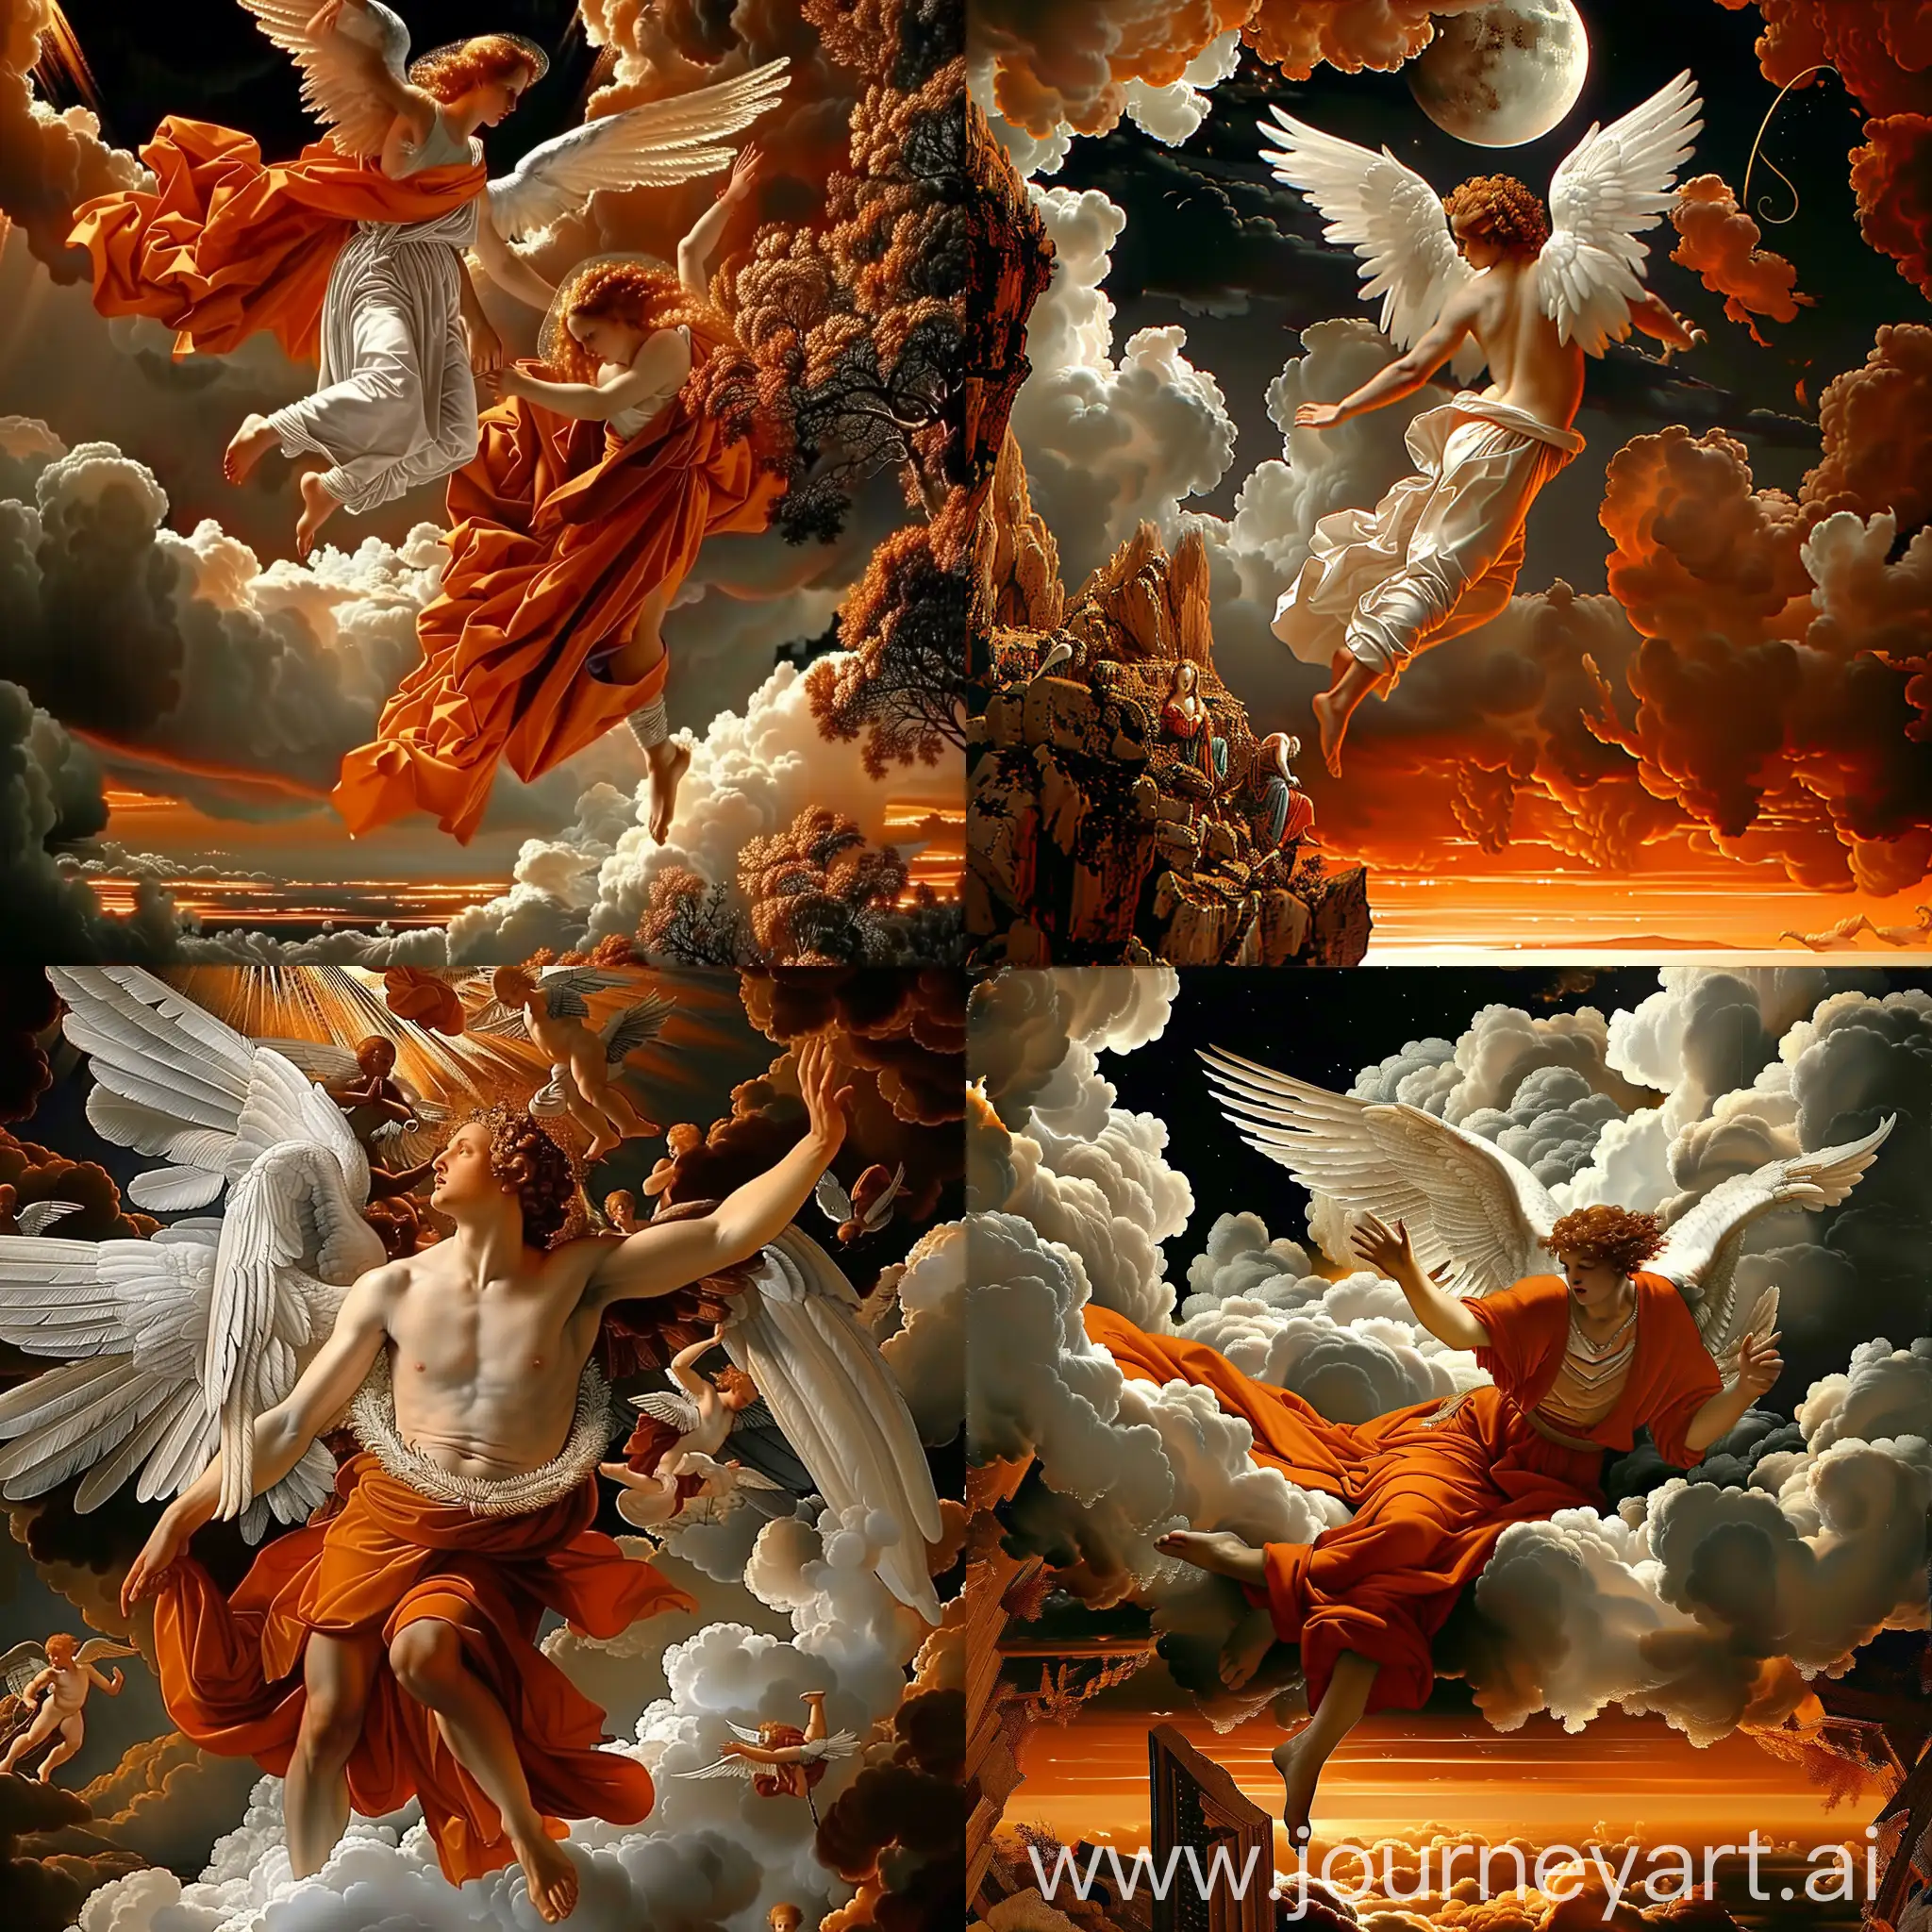 Renaissance Art The Expulsion of an Angel from Heaven | JourneyArt